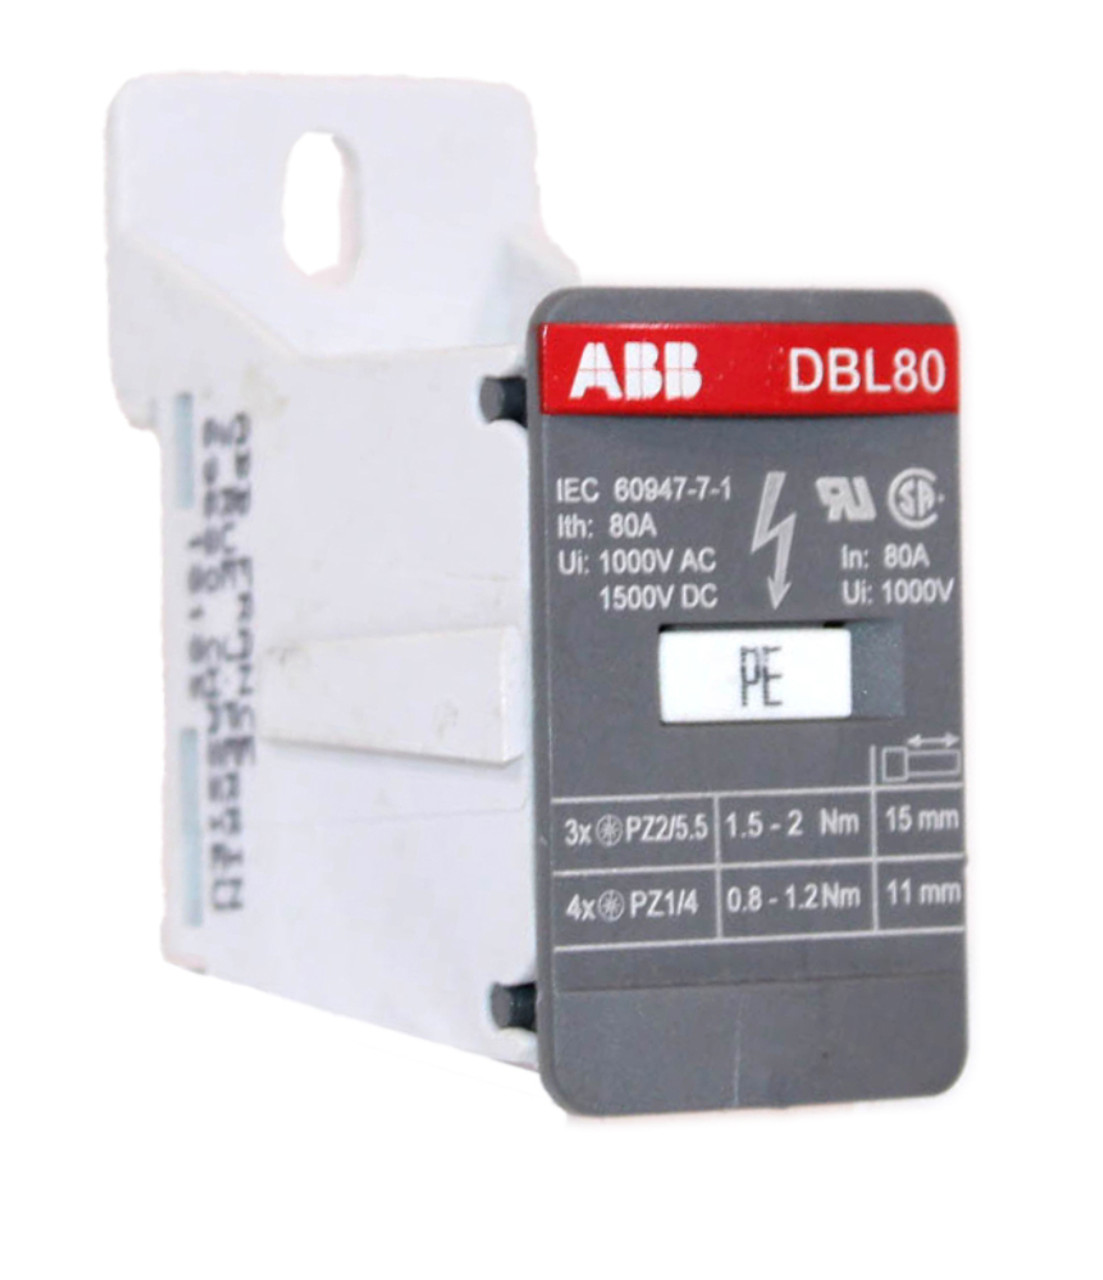 ABB DBL80 Distribution Block 30A 600V 10kA